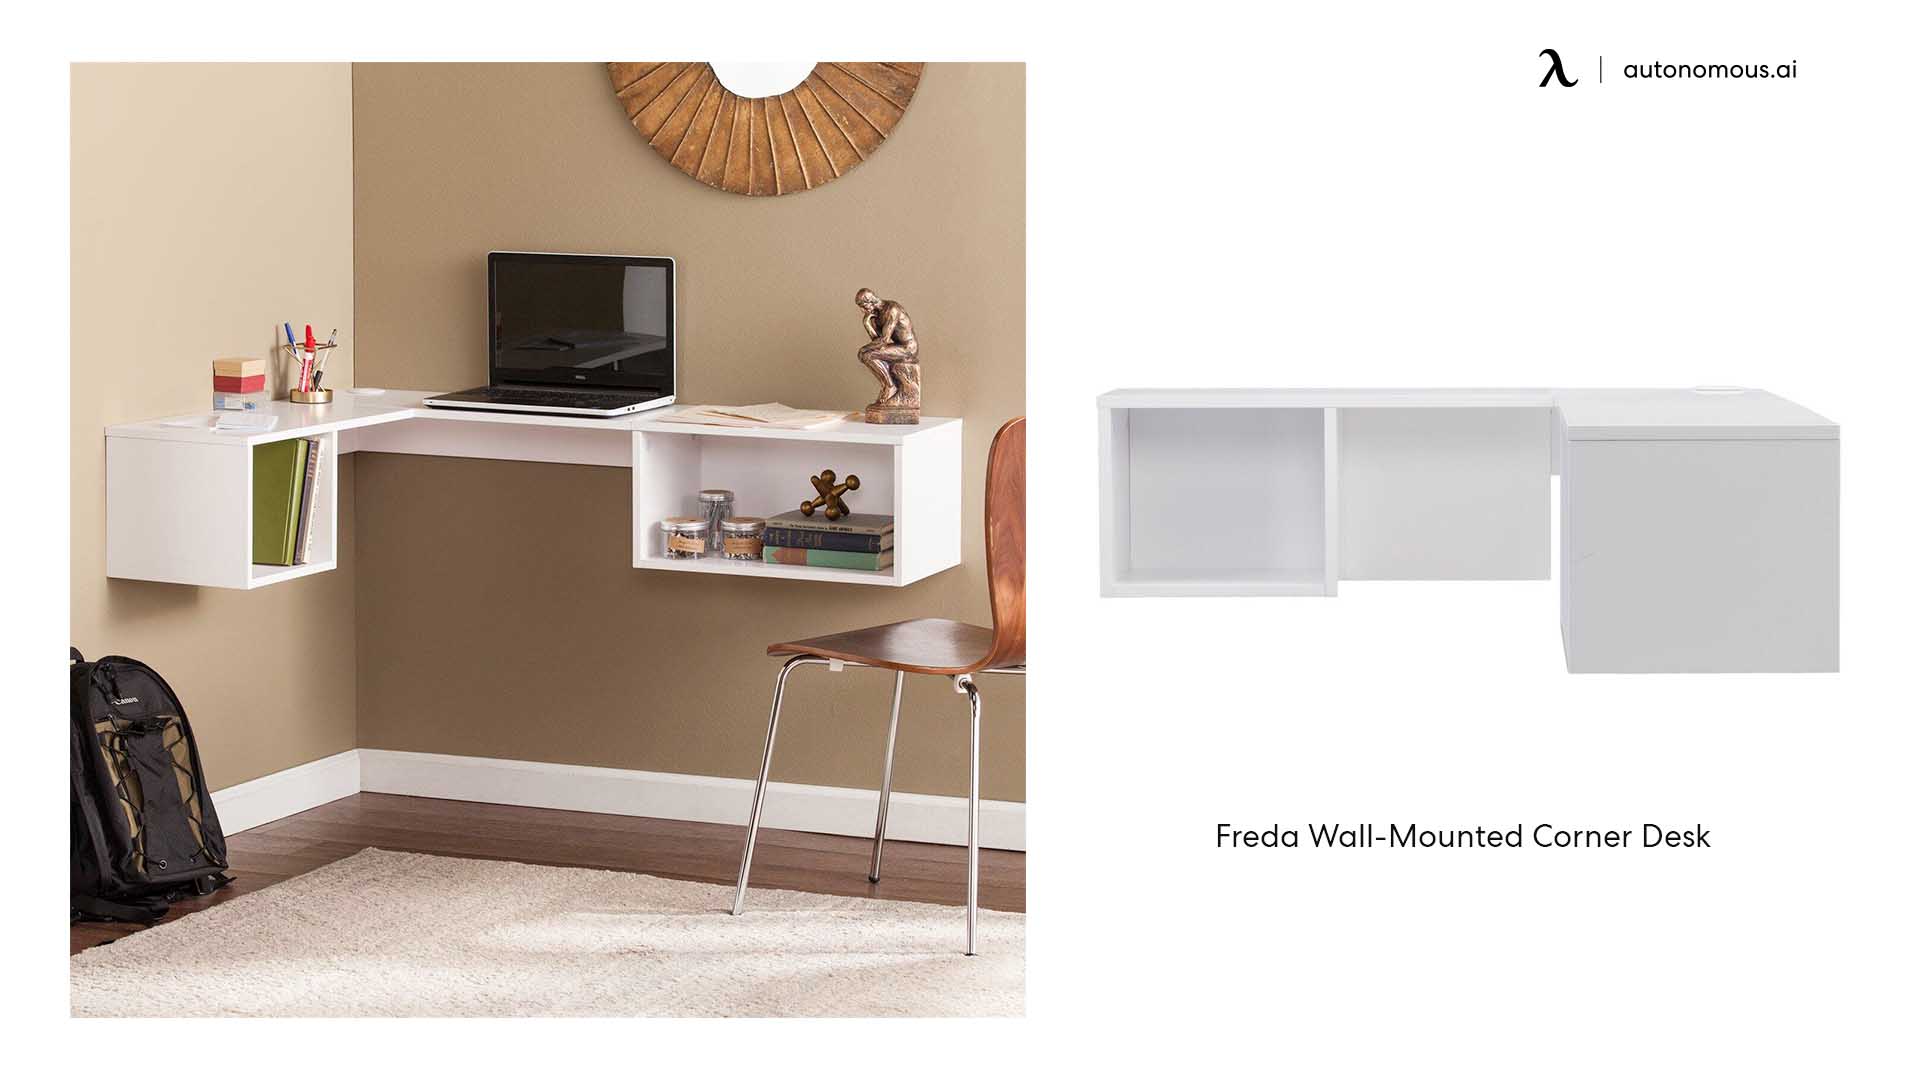 Freda Wall-Mounted Corner Desk